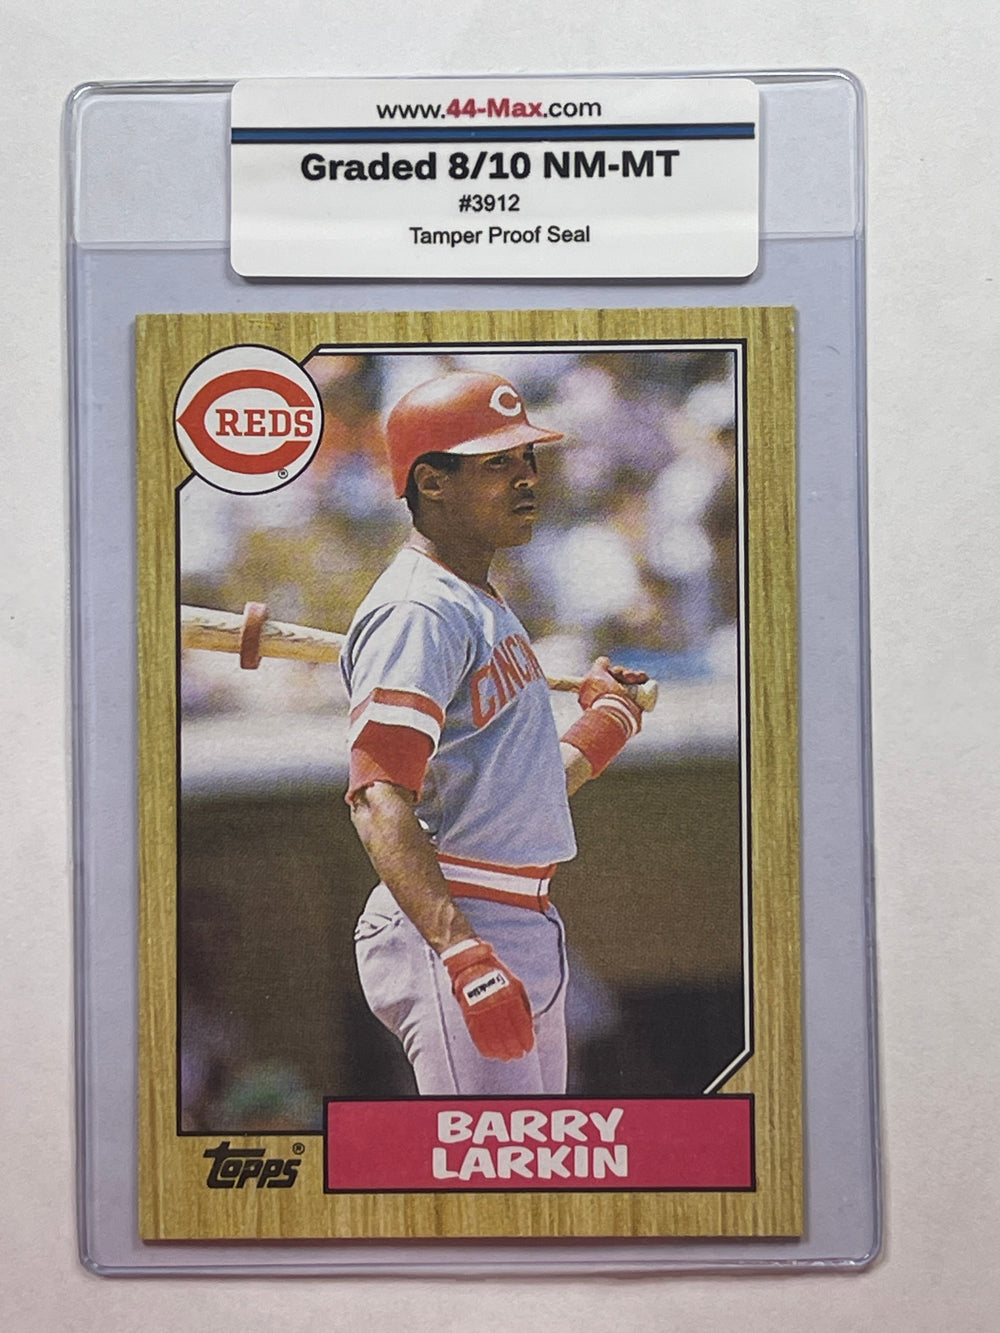 Barry Larkin Topps Baseball Rookie Card. 44-Max 8/10 NM-MT #3912